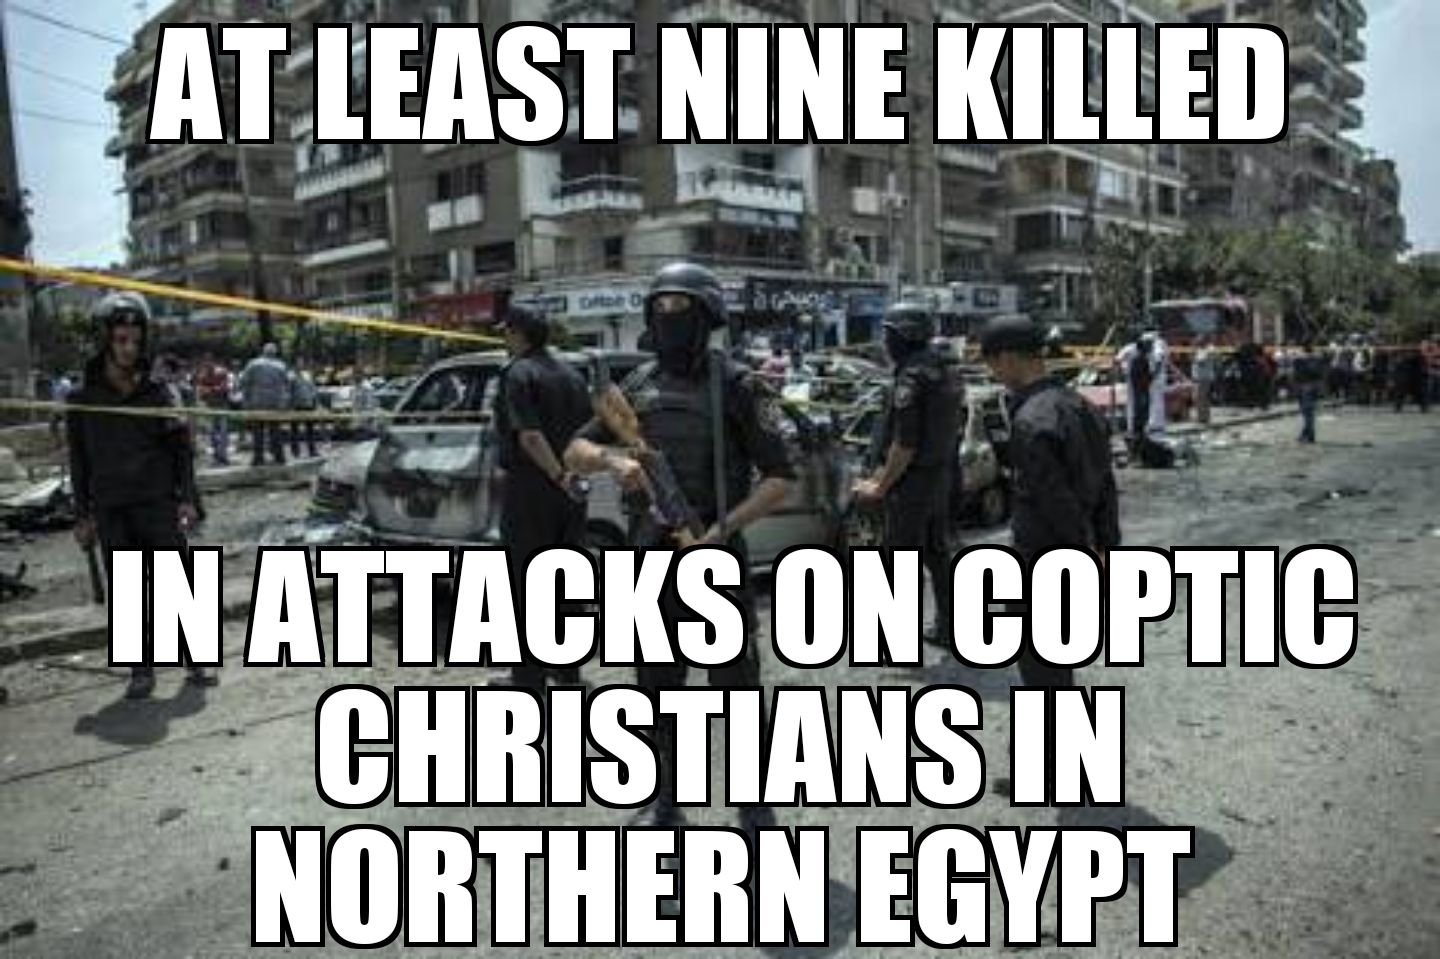 Attacks on Egypt Coptic Christians